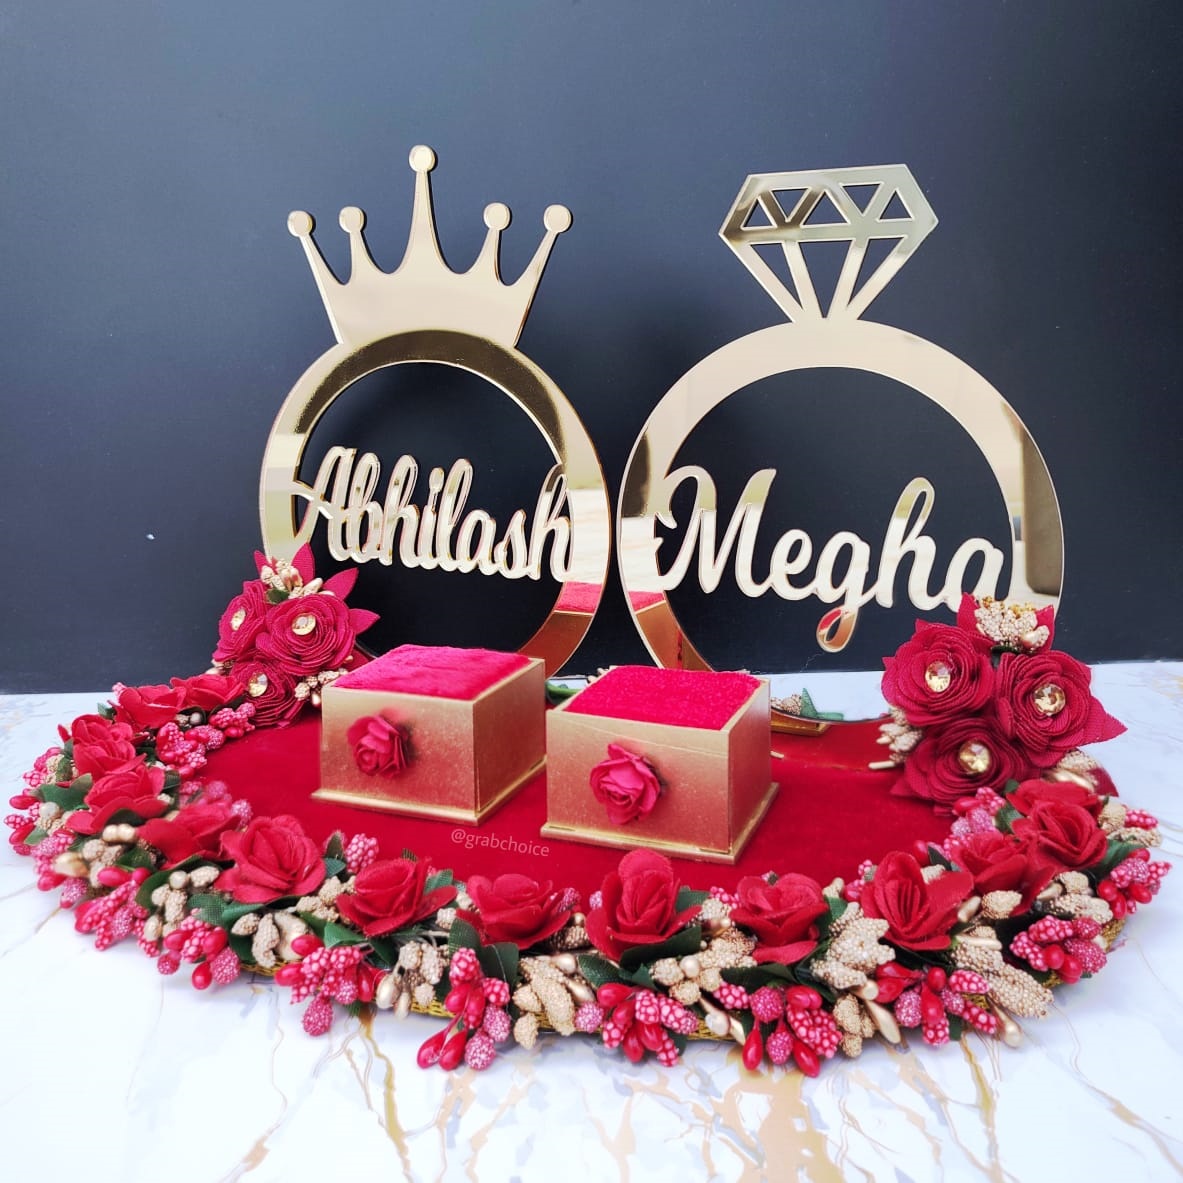 Wedding Wishes: Message Ideas for Wedding Cards | Interflora